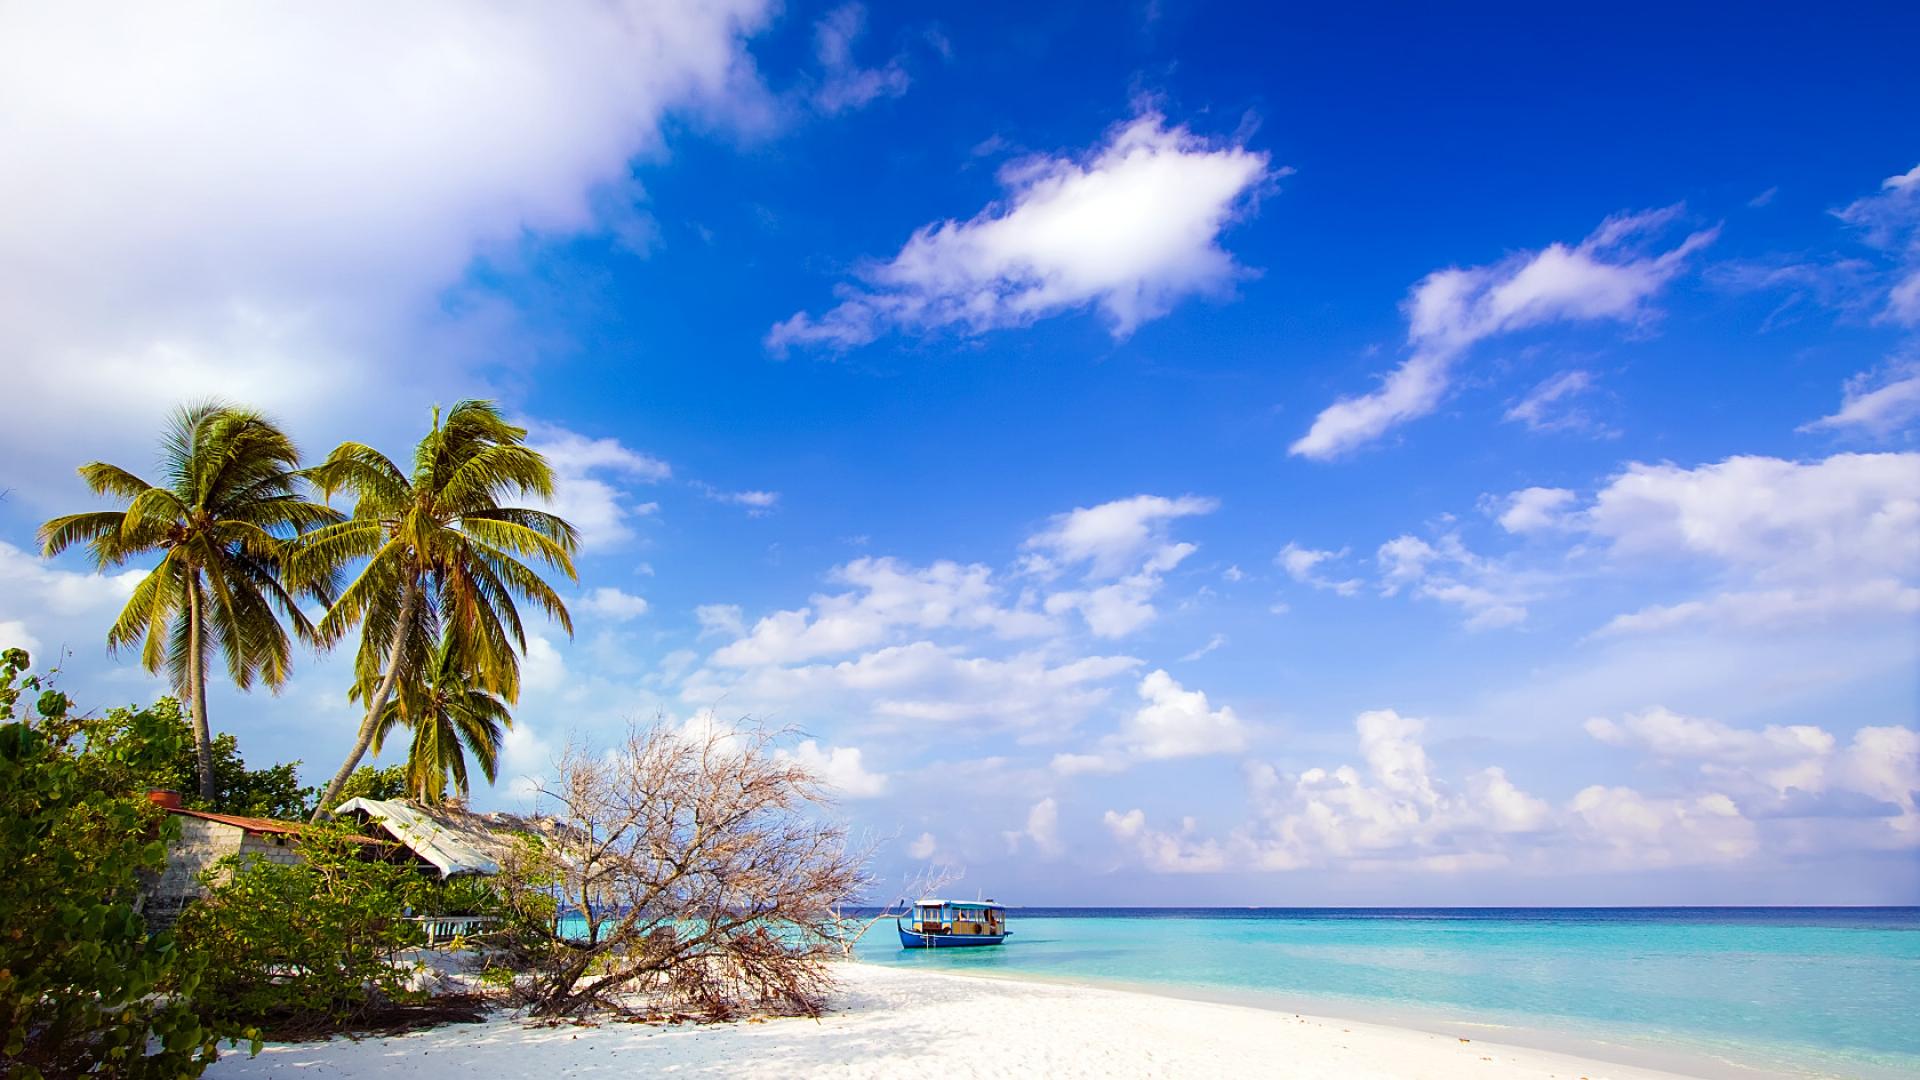 Download wallpaper 2560x1440 beach ocean sand palm trees bungalows widescreen  169 hd background